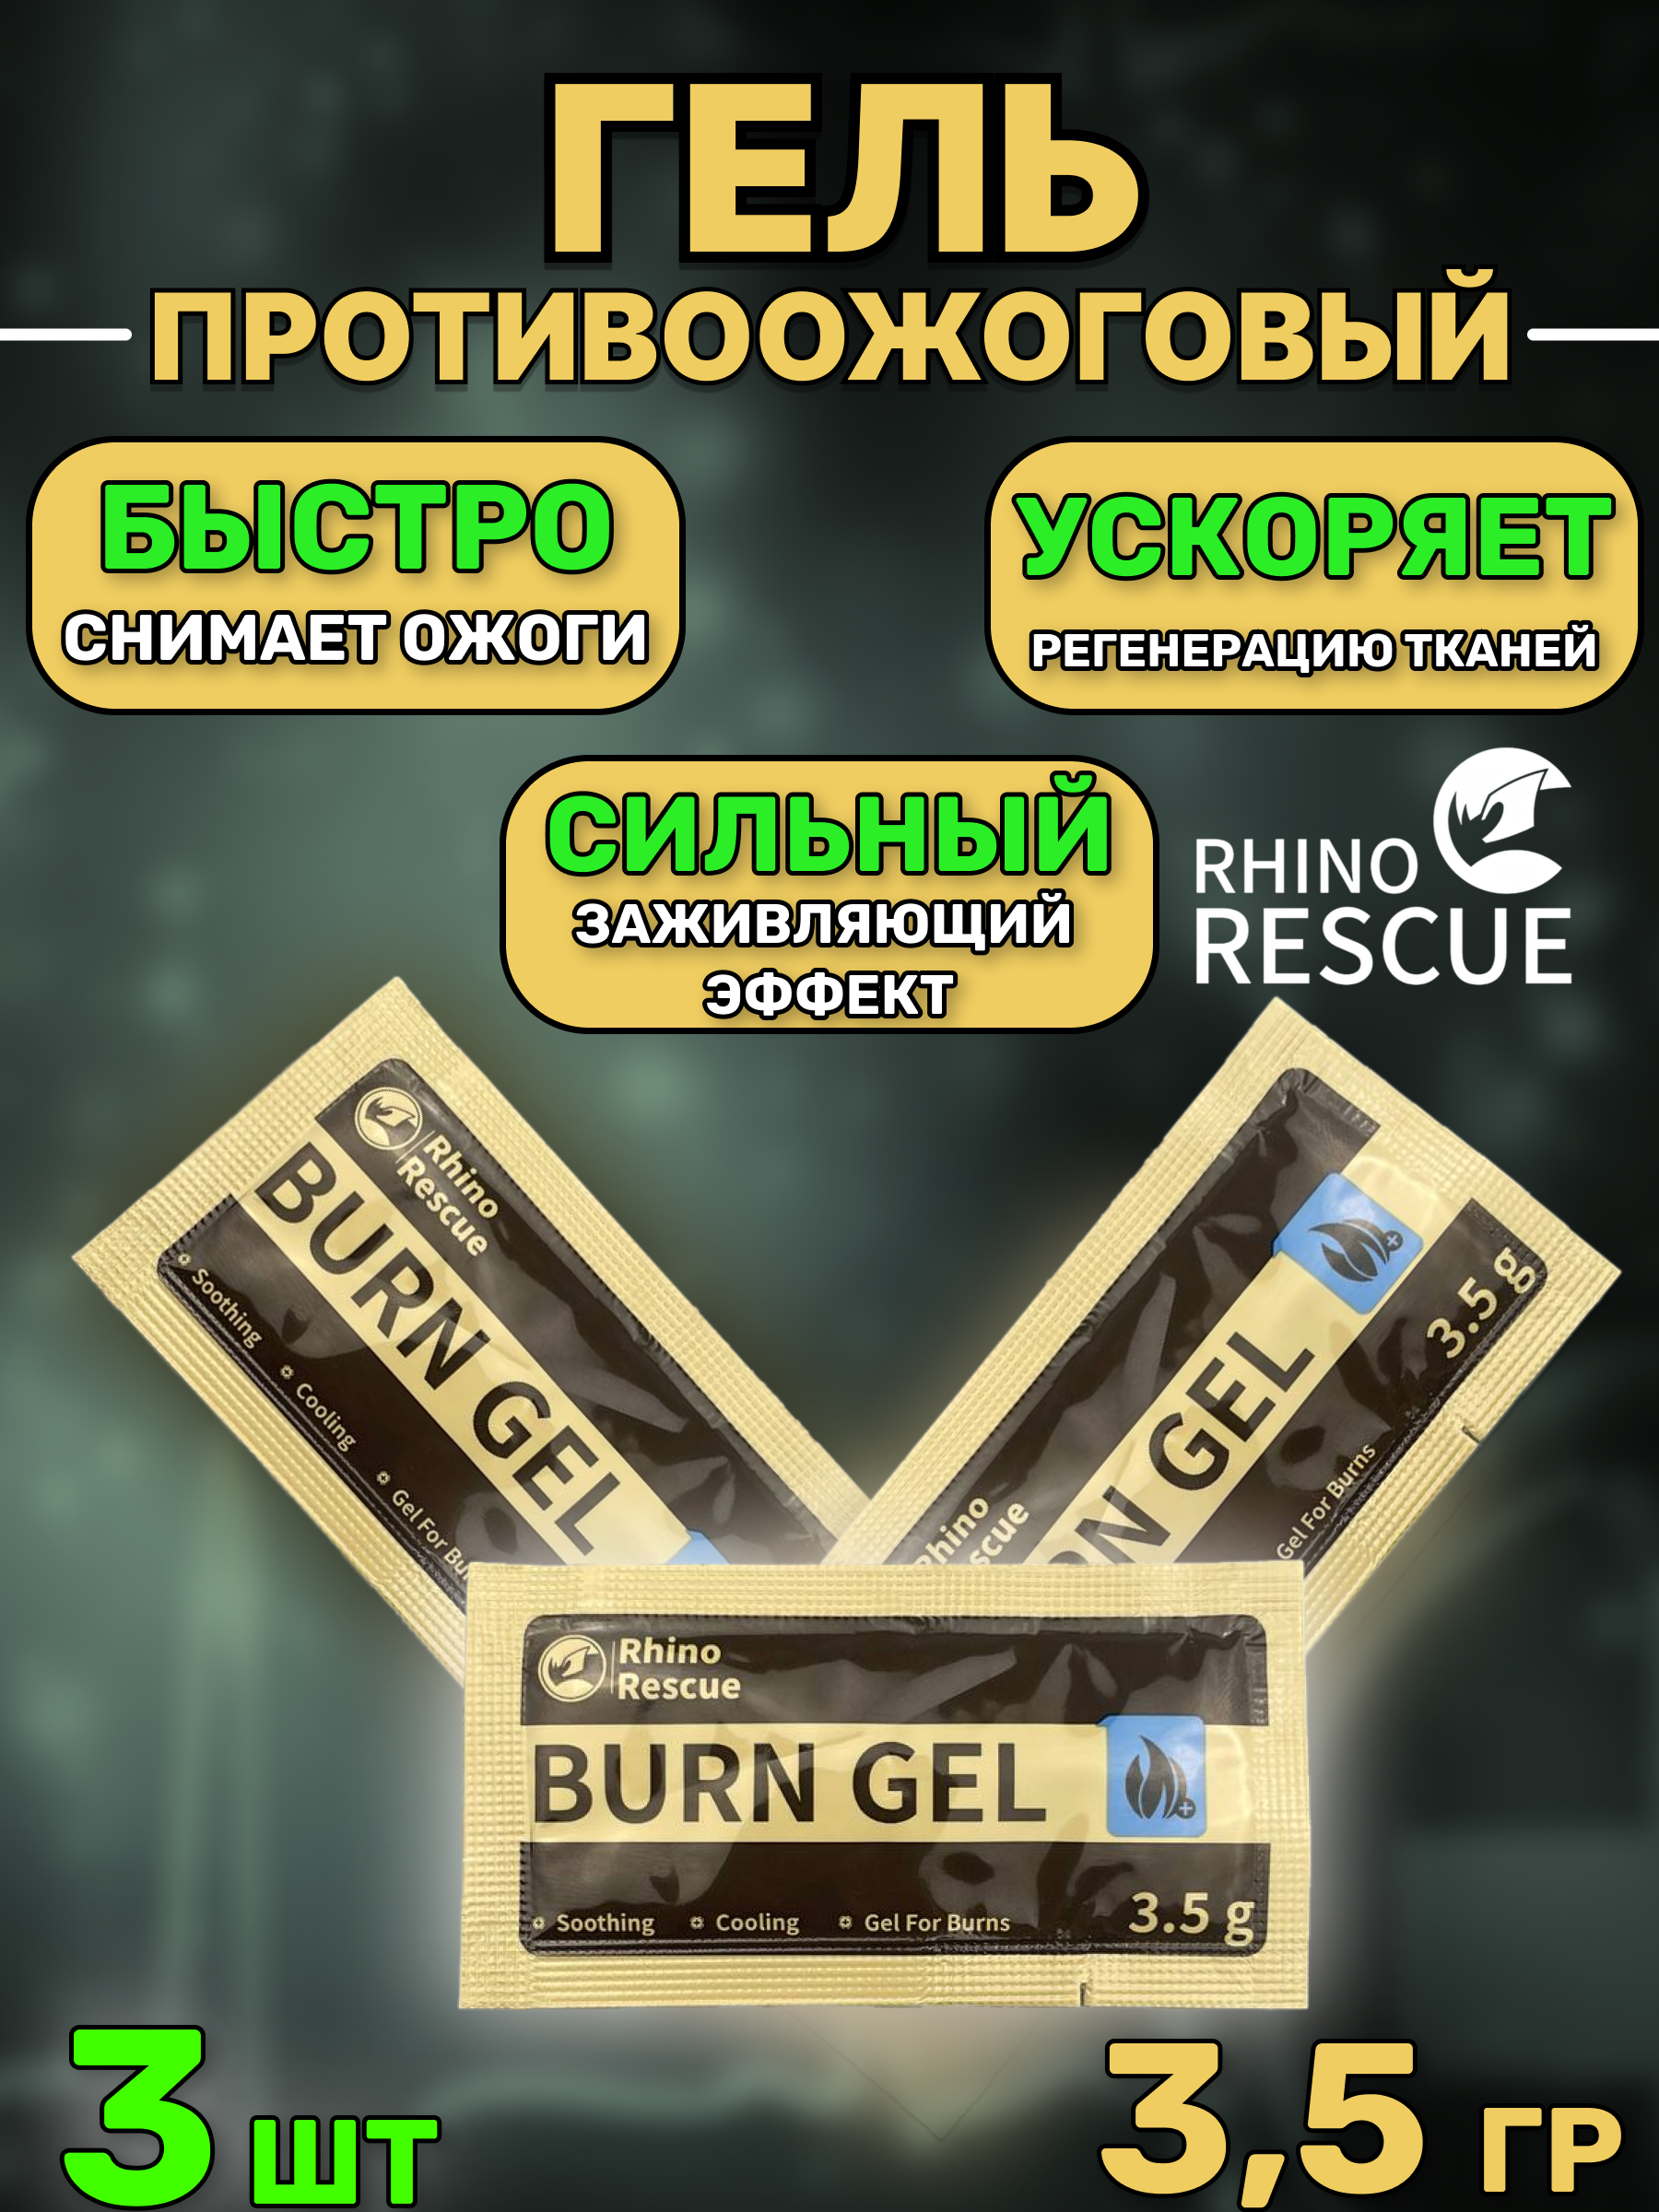 Rhino rescue противоожоговый гель burn dressin 3.5 мл 3 шт